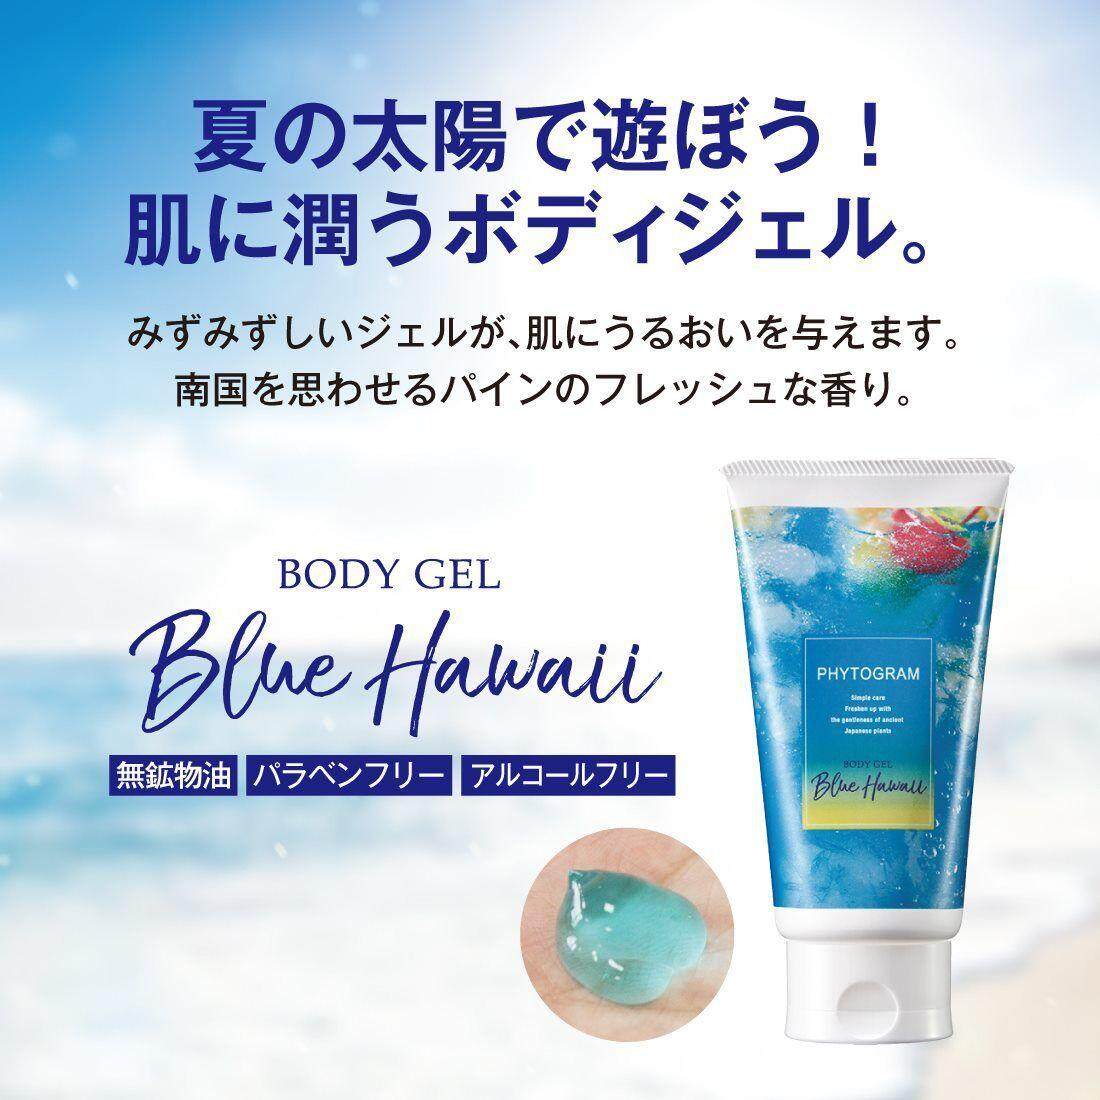 Meiko Phytogram body gel blue hawaii